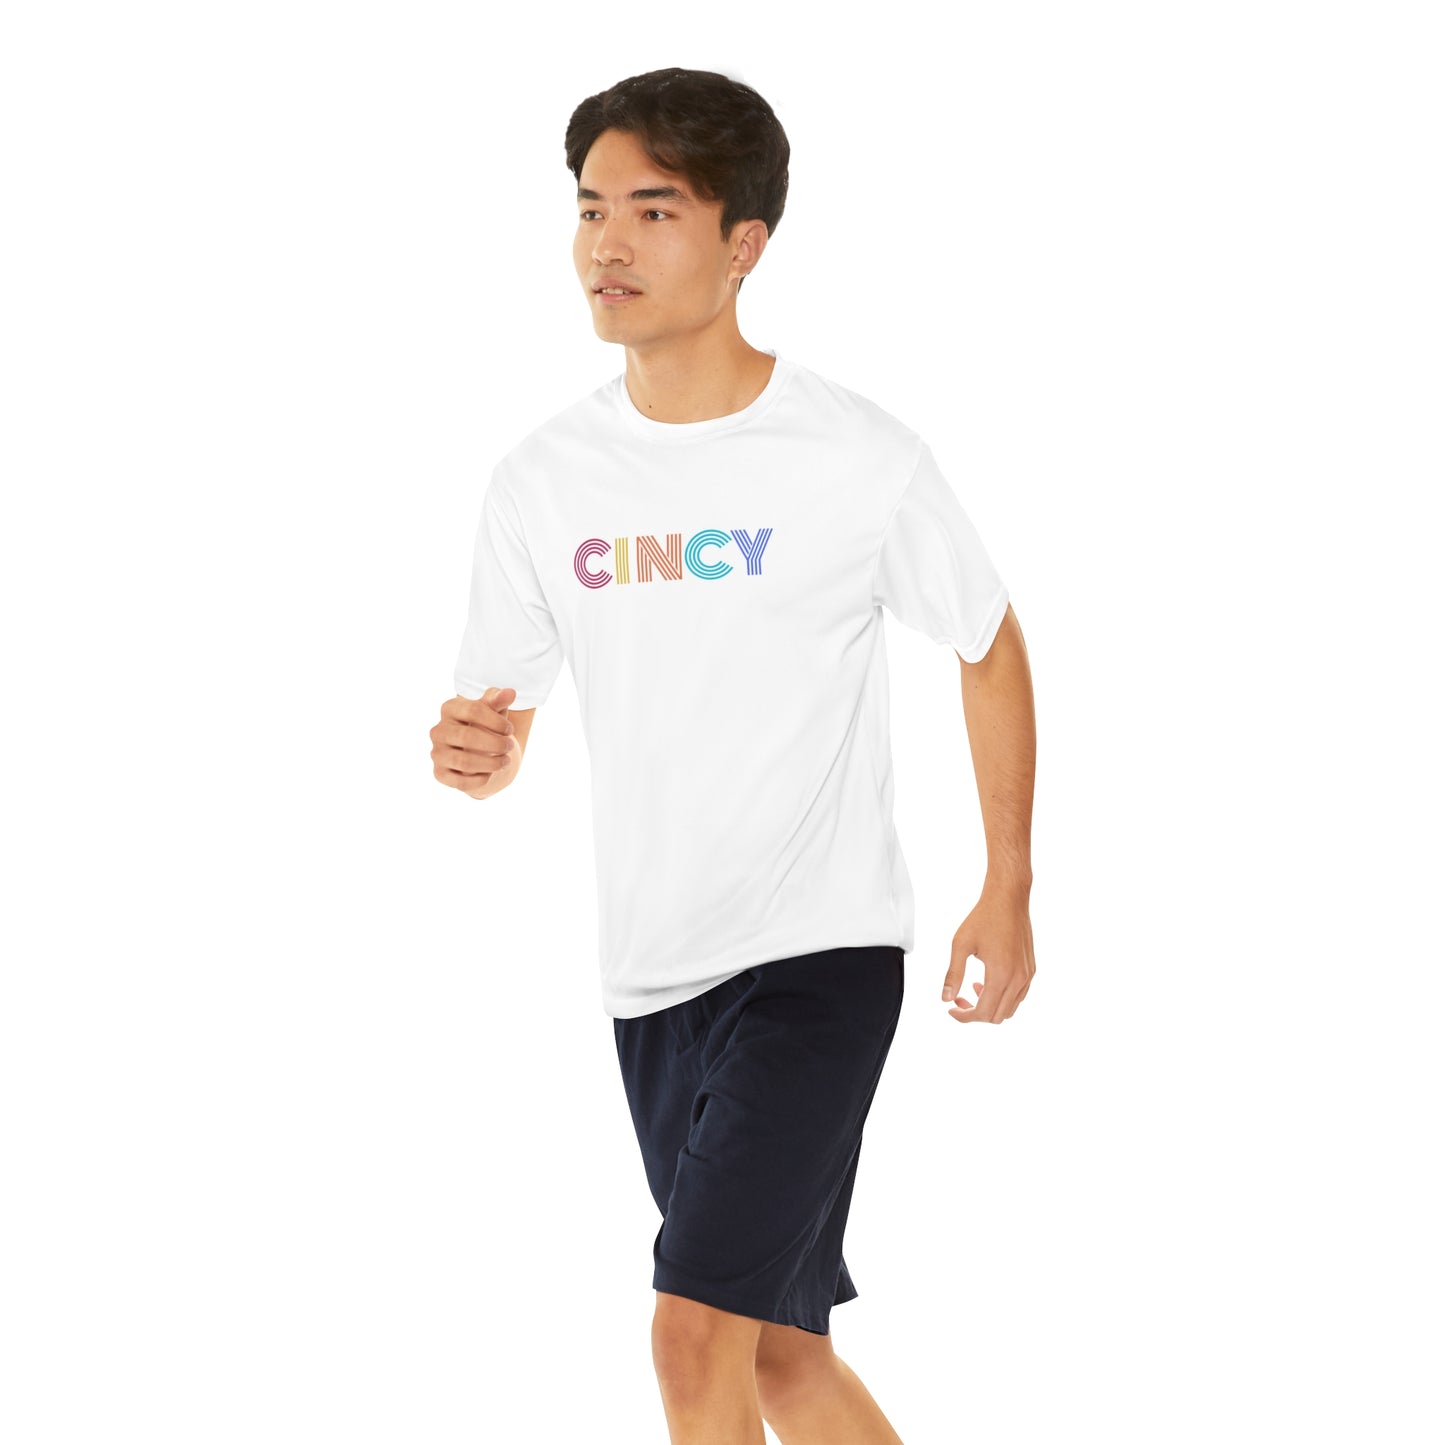 CINCY - Men's Performance T-Shirt